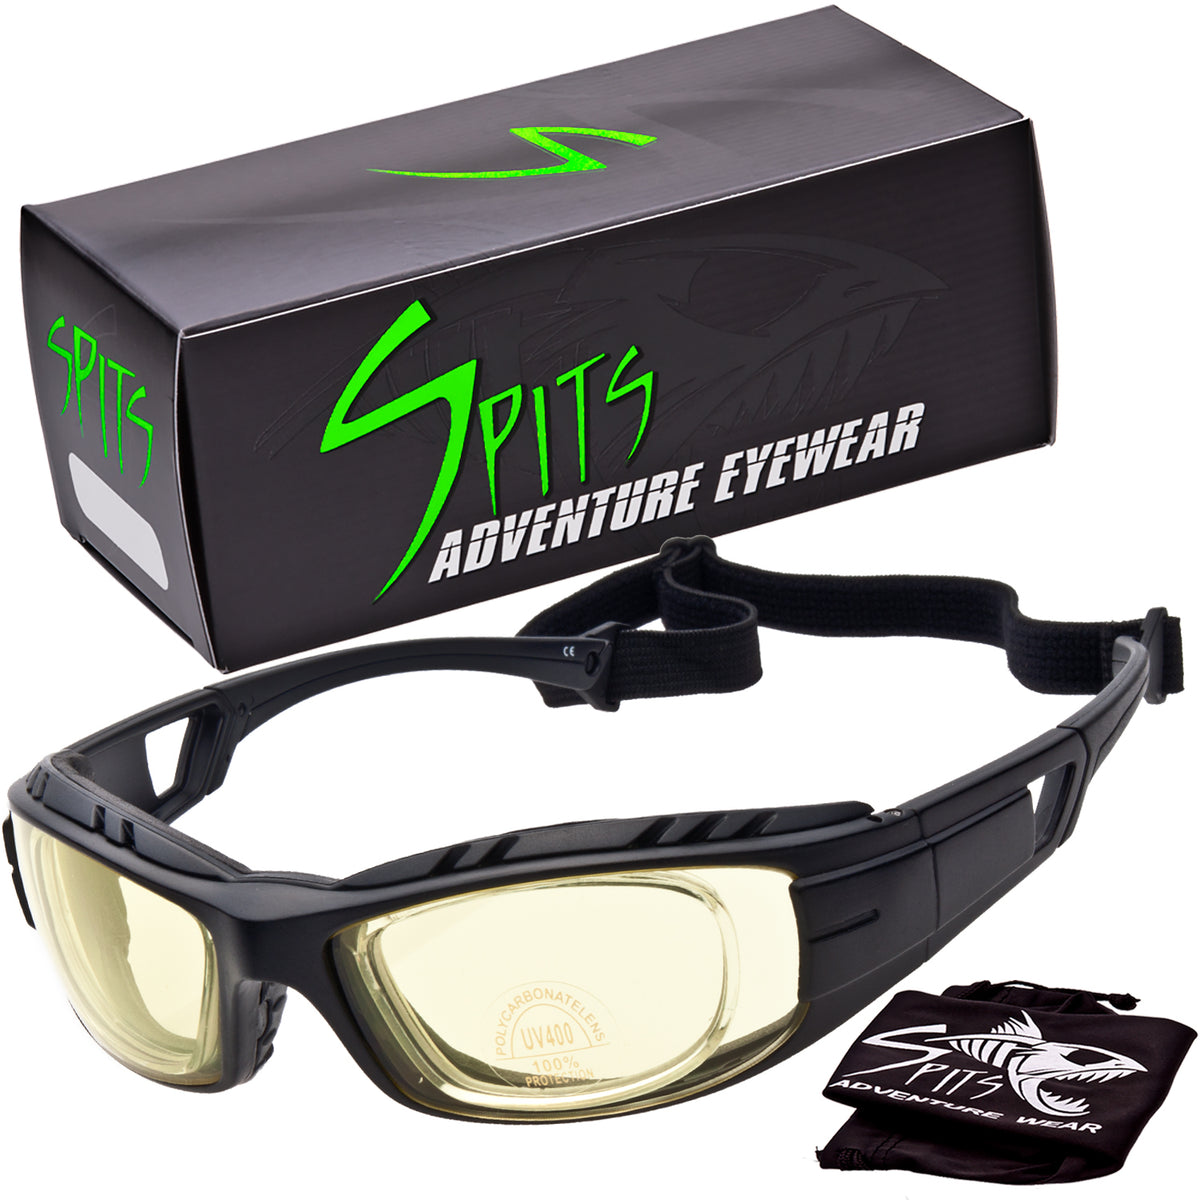 Hardtail Removable Foam Padding Sunglasses, Includes Prescription Adapter